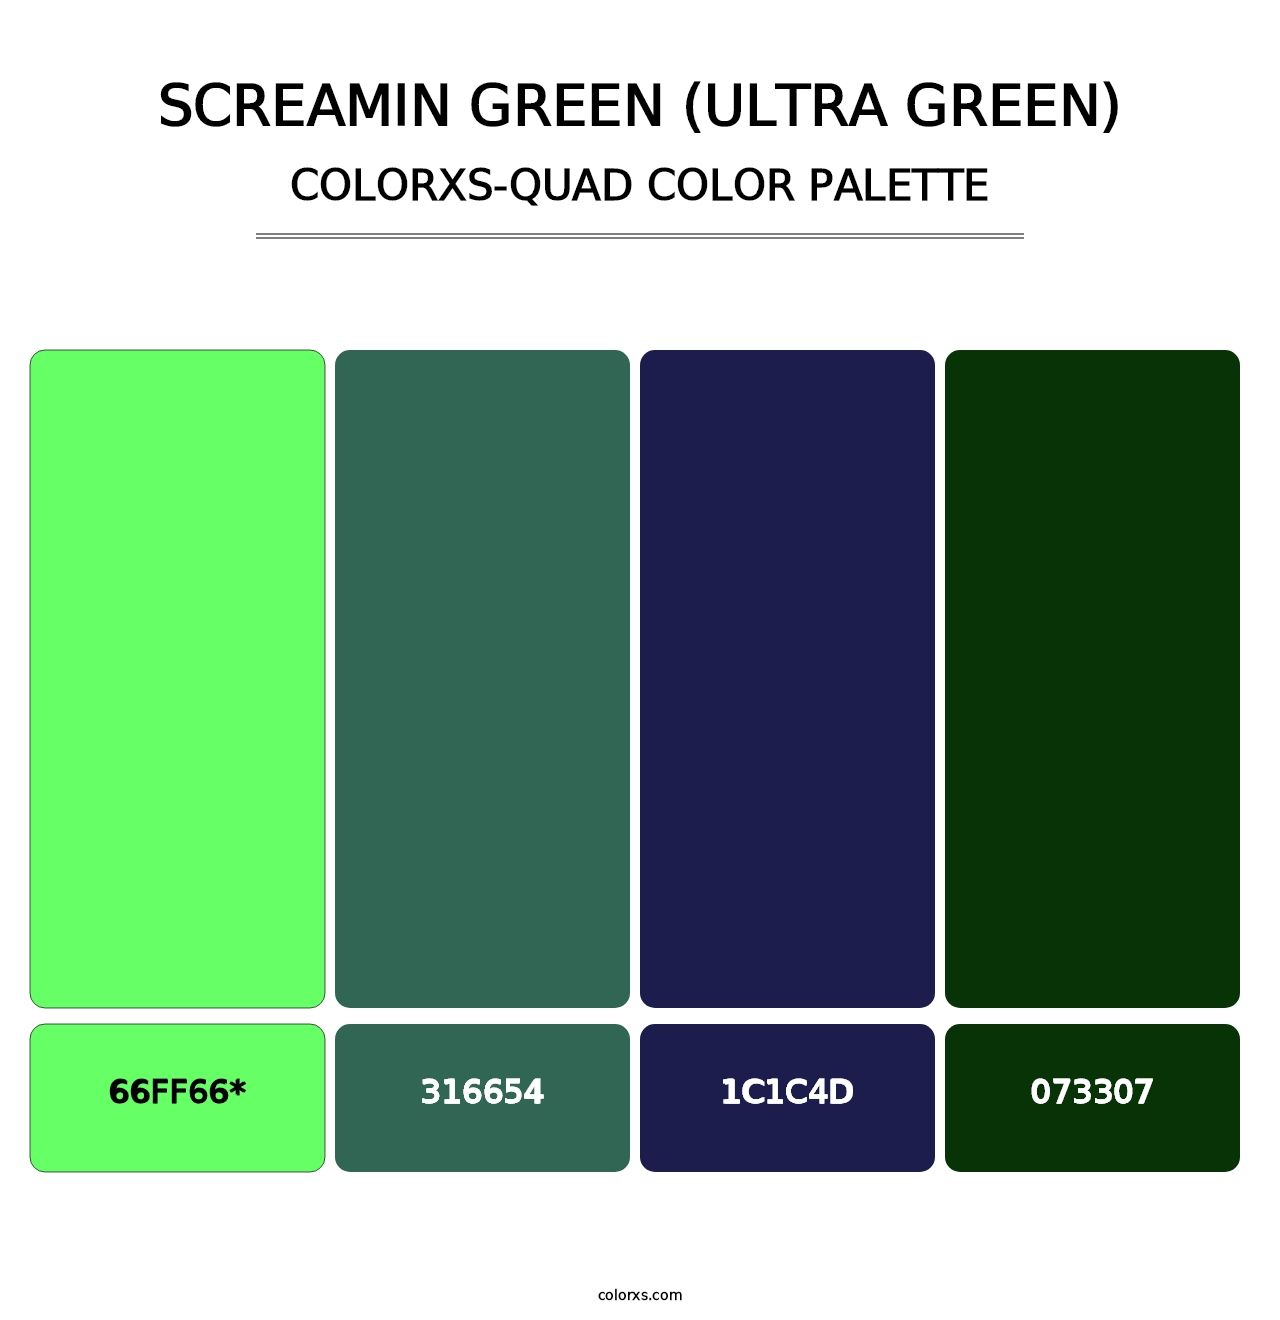 Screamin Green (Ultra Green) - Colorxs Quad Palette